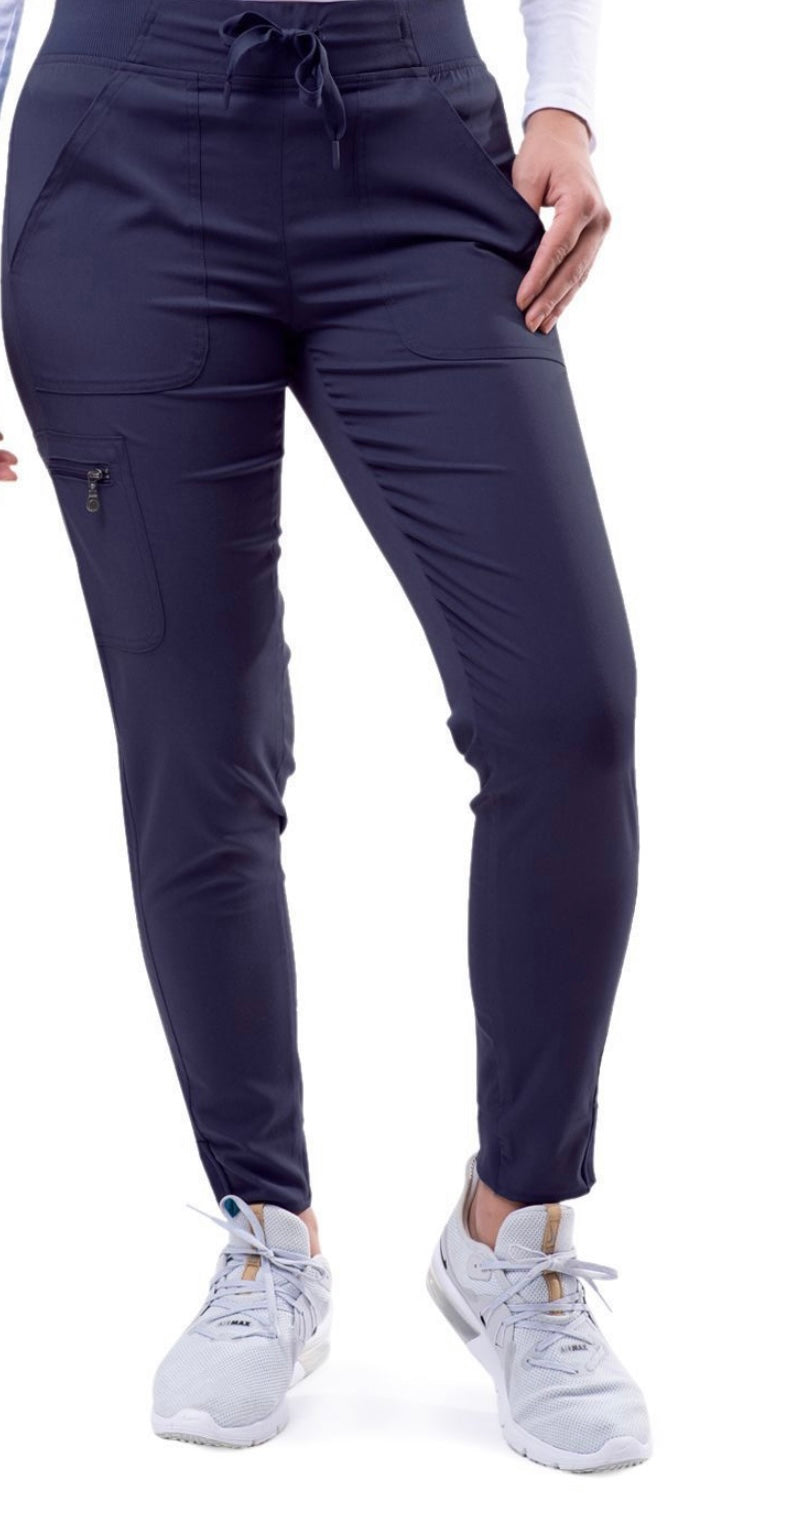 Adar Pro Women's Modern Athletic Jogger - Scrub Pants - 9500